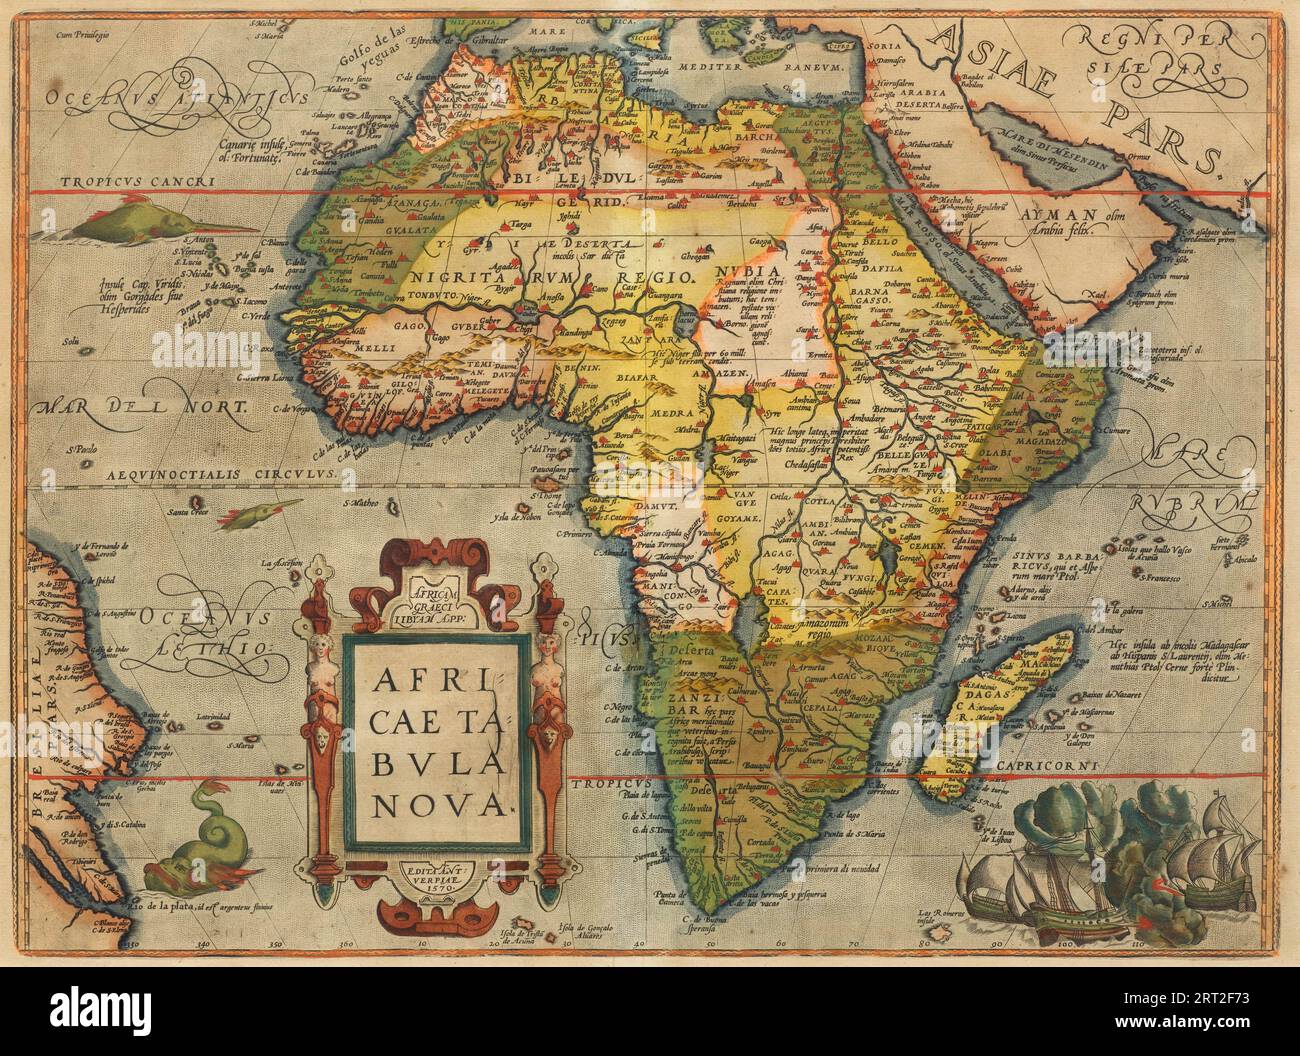 Africae Tabula Nova. From Theatrum Orbis Terrarum, 1572. Private Collection. Stock Photo